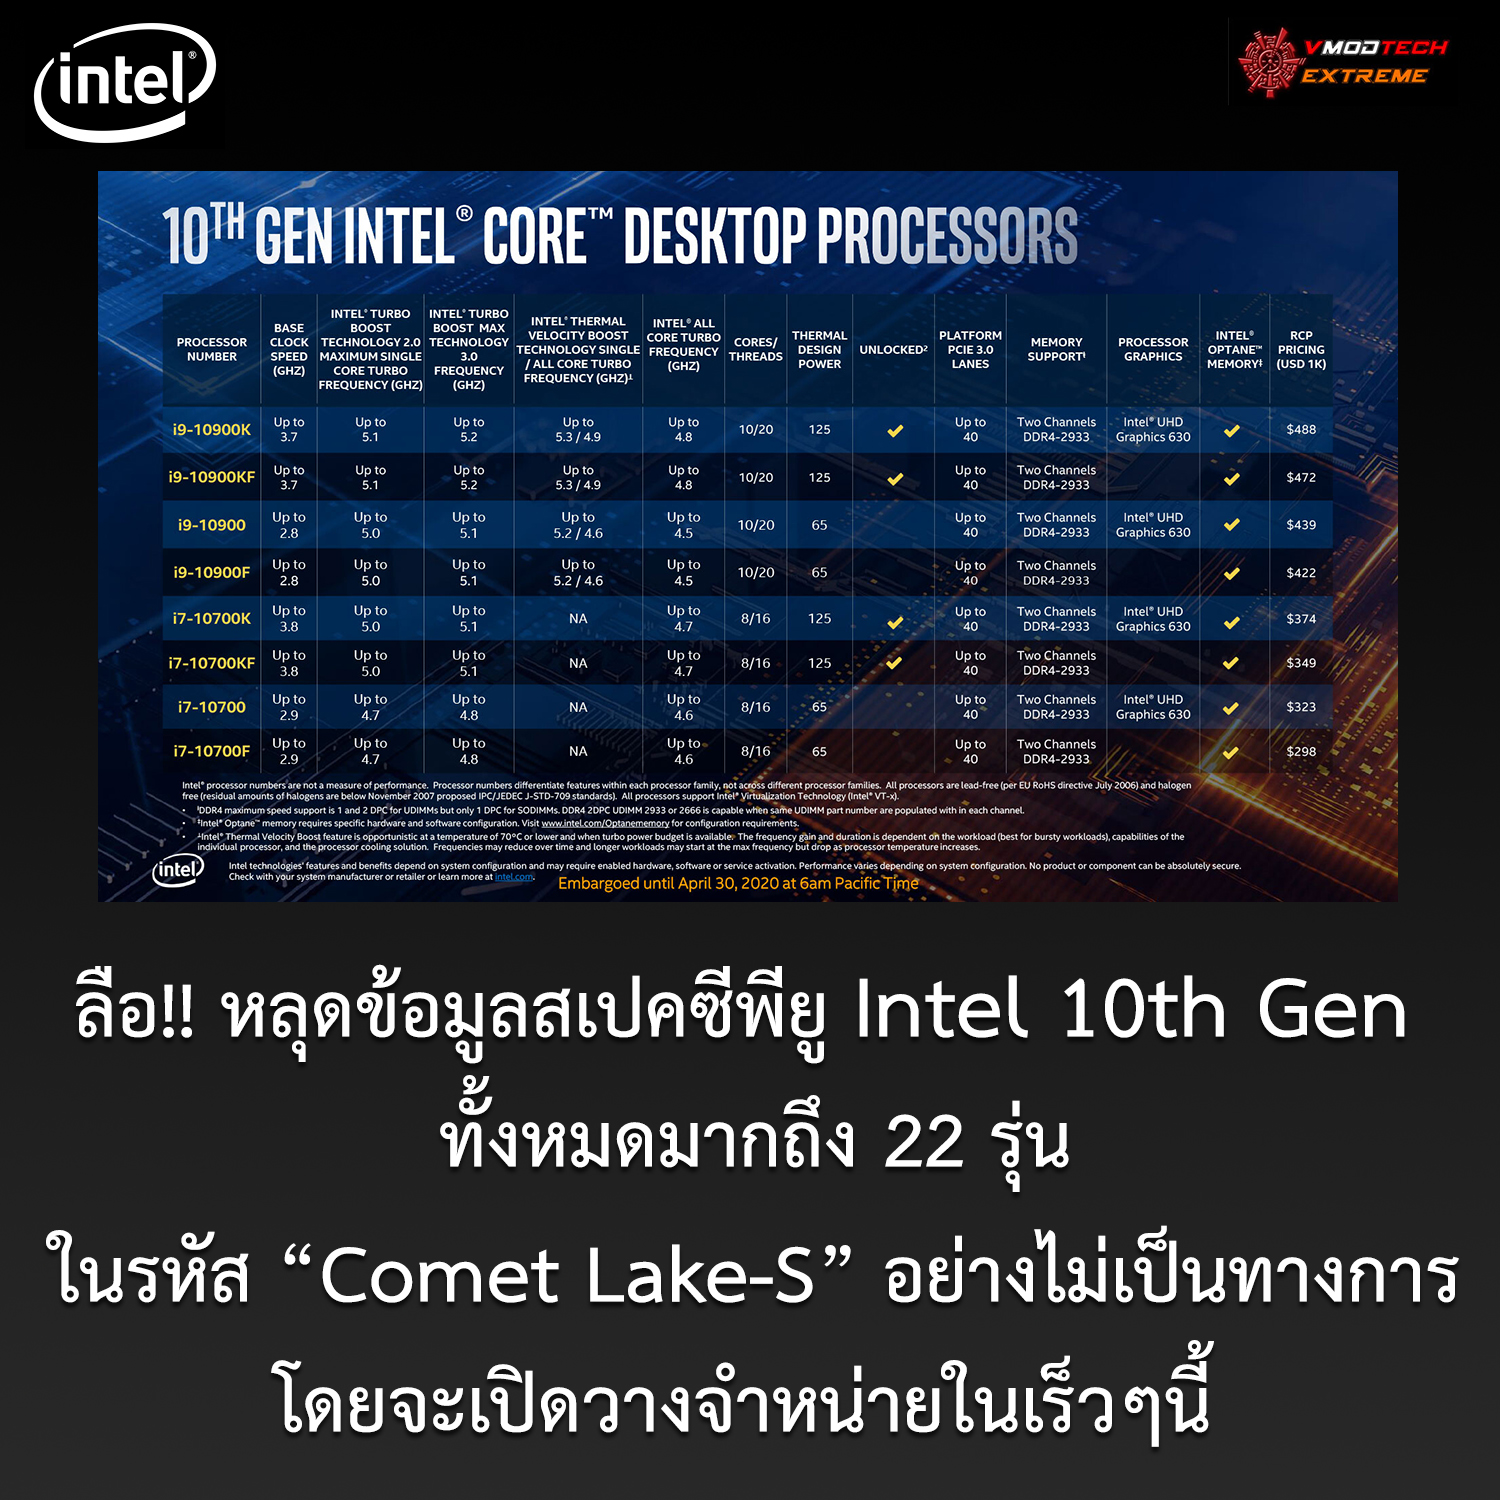 intel 10th gen spec ลือ!! หลุดข้อมูลสเปคซีพียู Intel 10th Gen ทั้งหมดมากถึง 22 รุ่นในรหัส Comet Lake S อย่างไม่เป็นทางการ